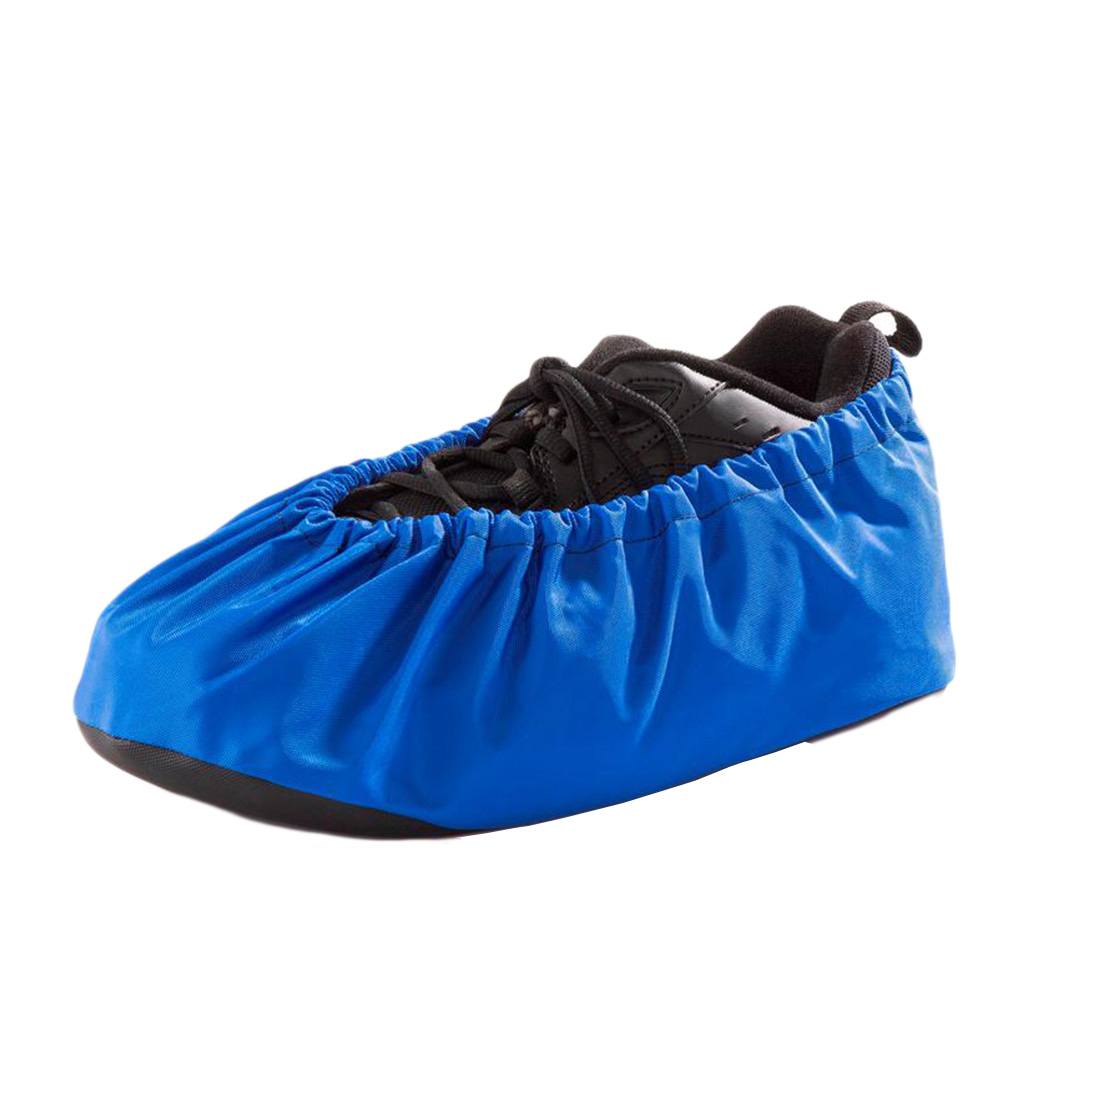 Pro Shoe Cover Blue Front View